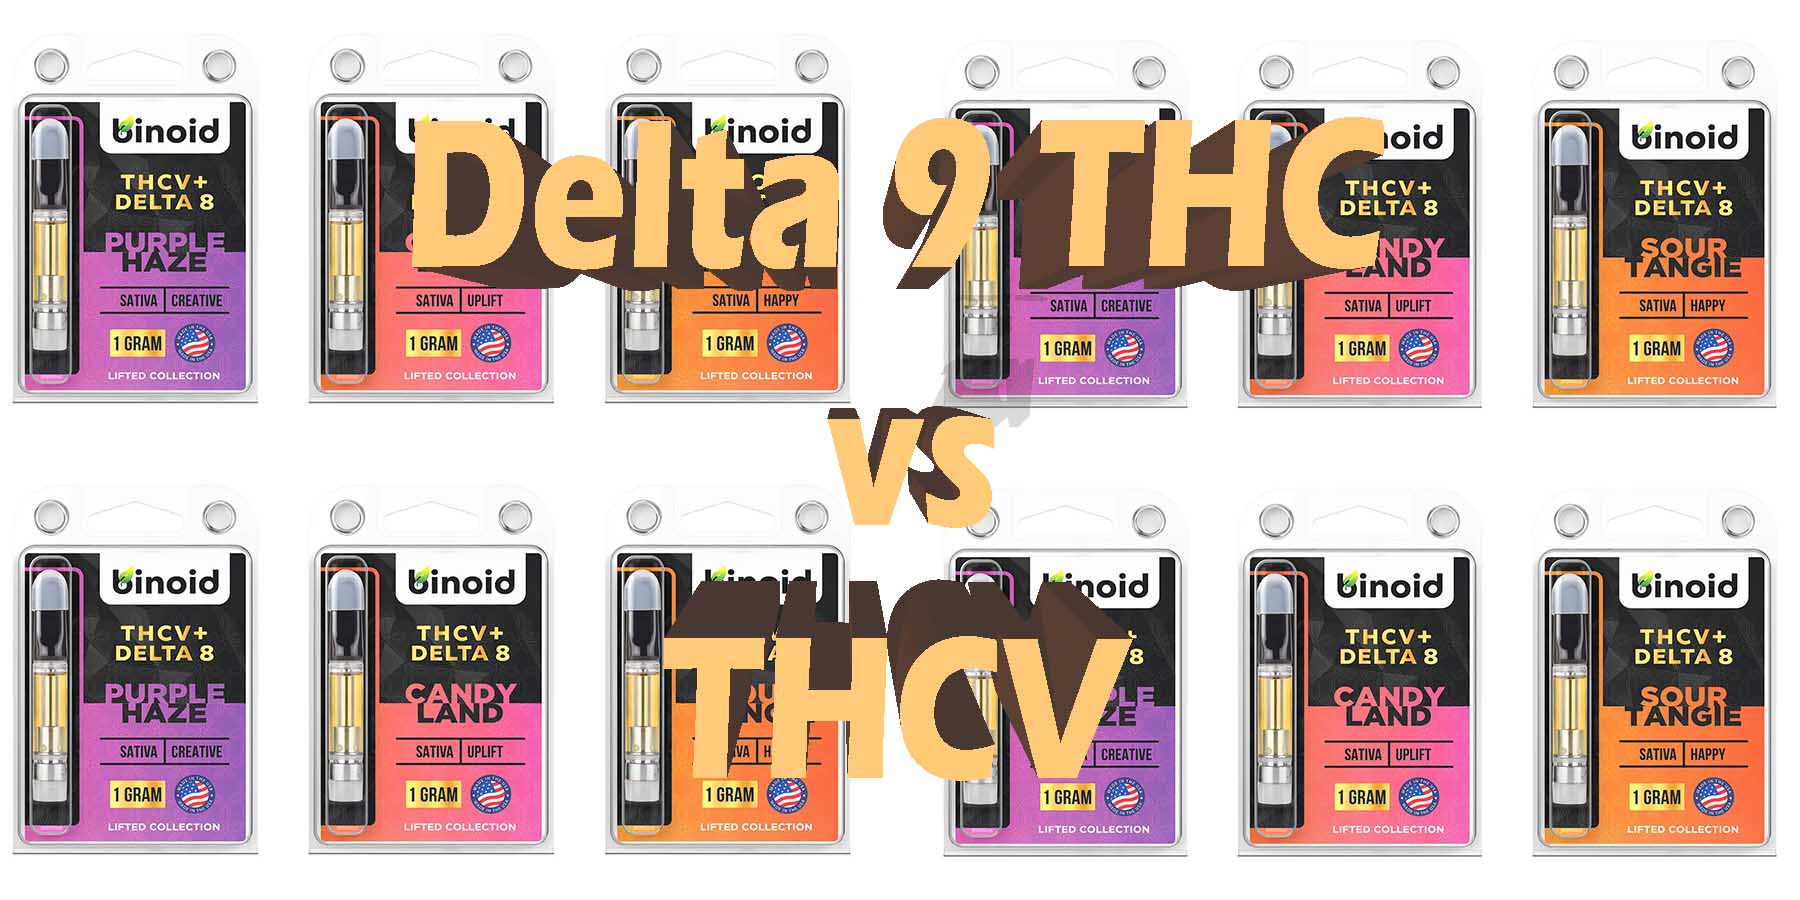 Delta 9 THC vs THCV GoodPrice GetNearMe LowestCoupon DiscountStore Shoponline VapeCarts Online StrongestSmoke ShopBinoid THC